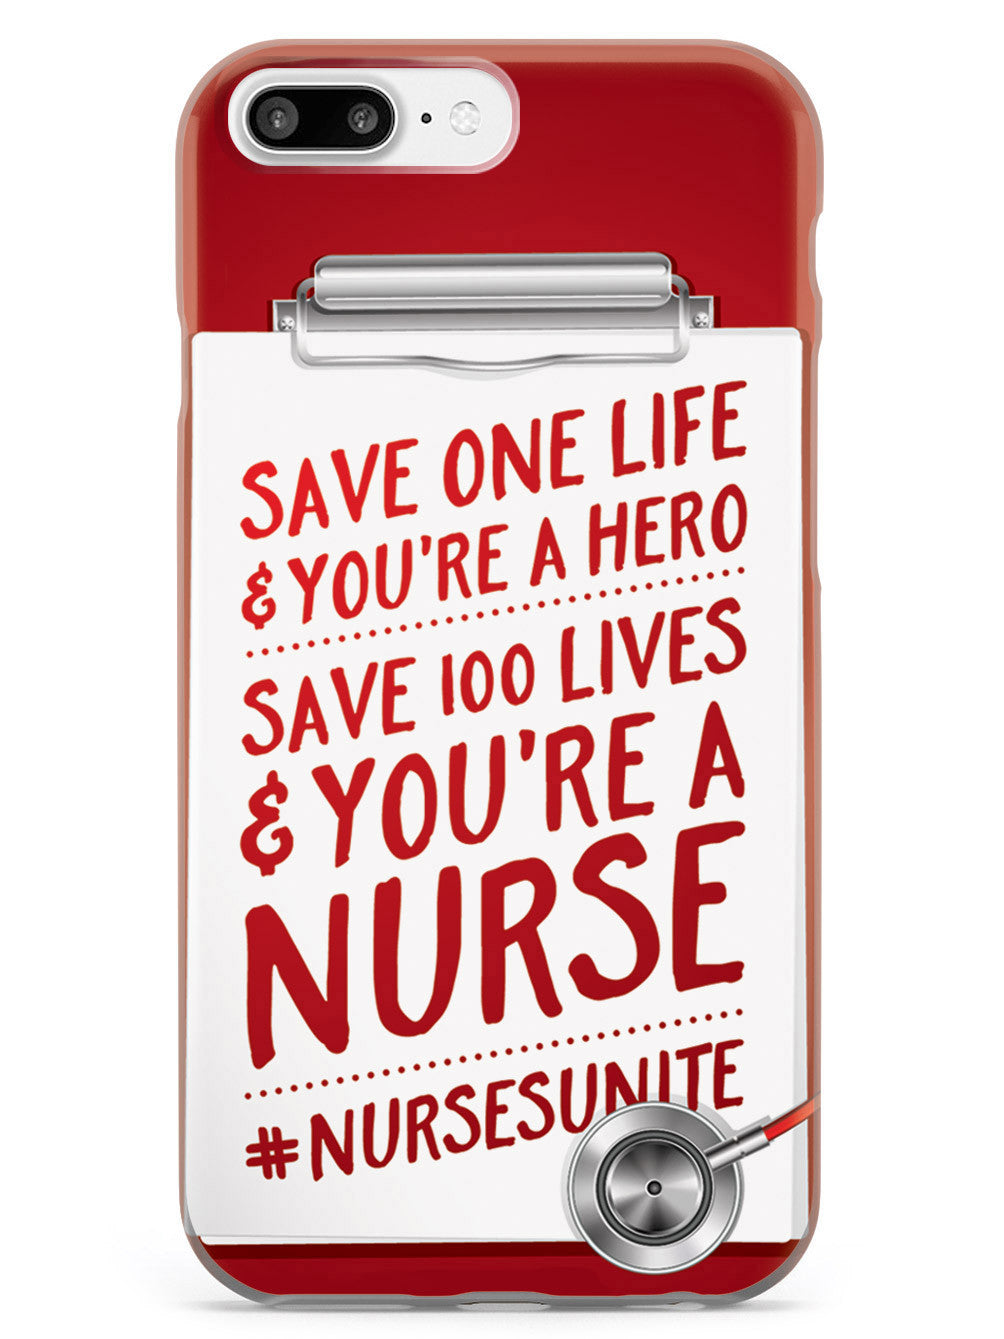 Save 100 Lives and You're A Nurse - #NursesUnite Case